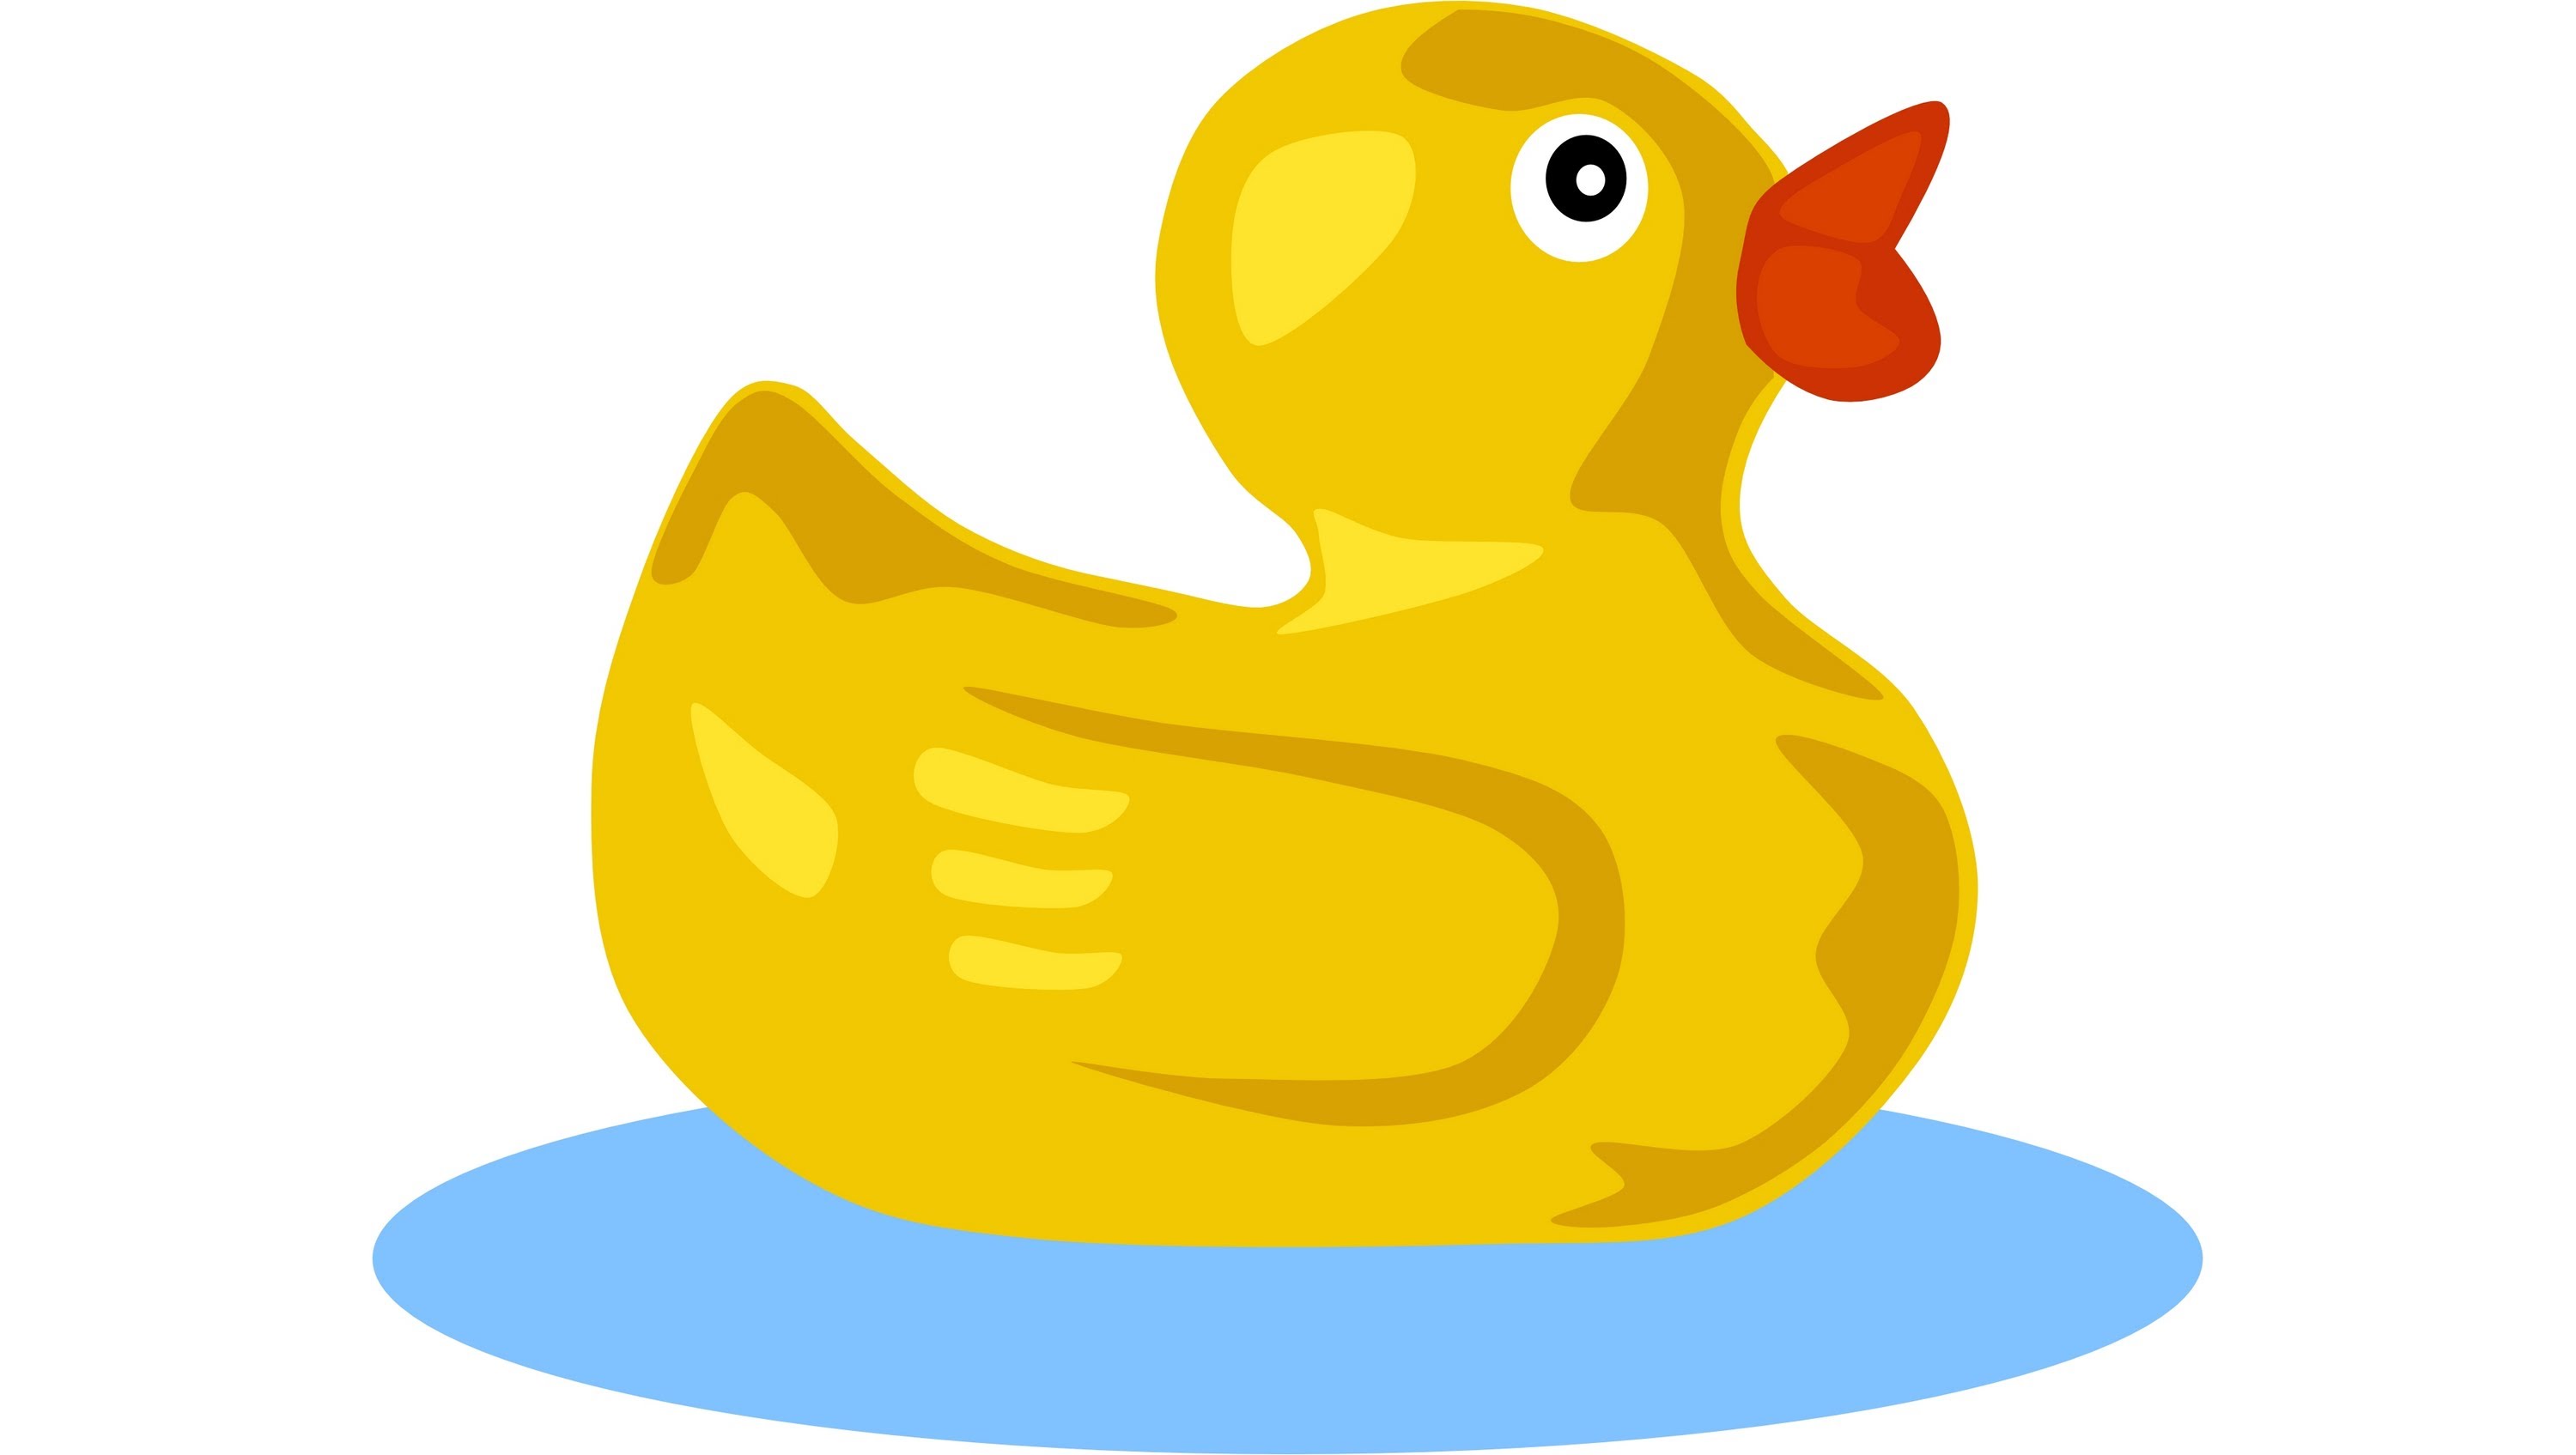 Duck quack sound effect. 4 clipart ducks